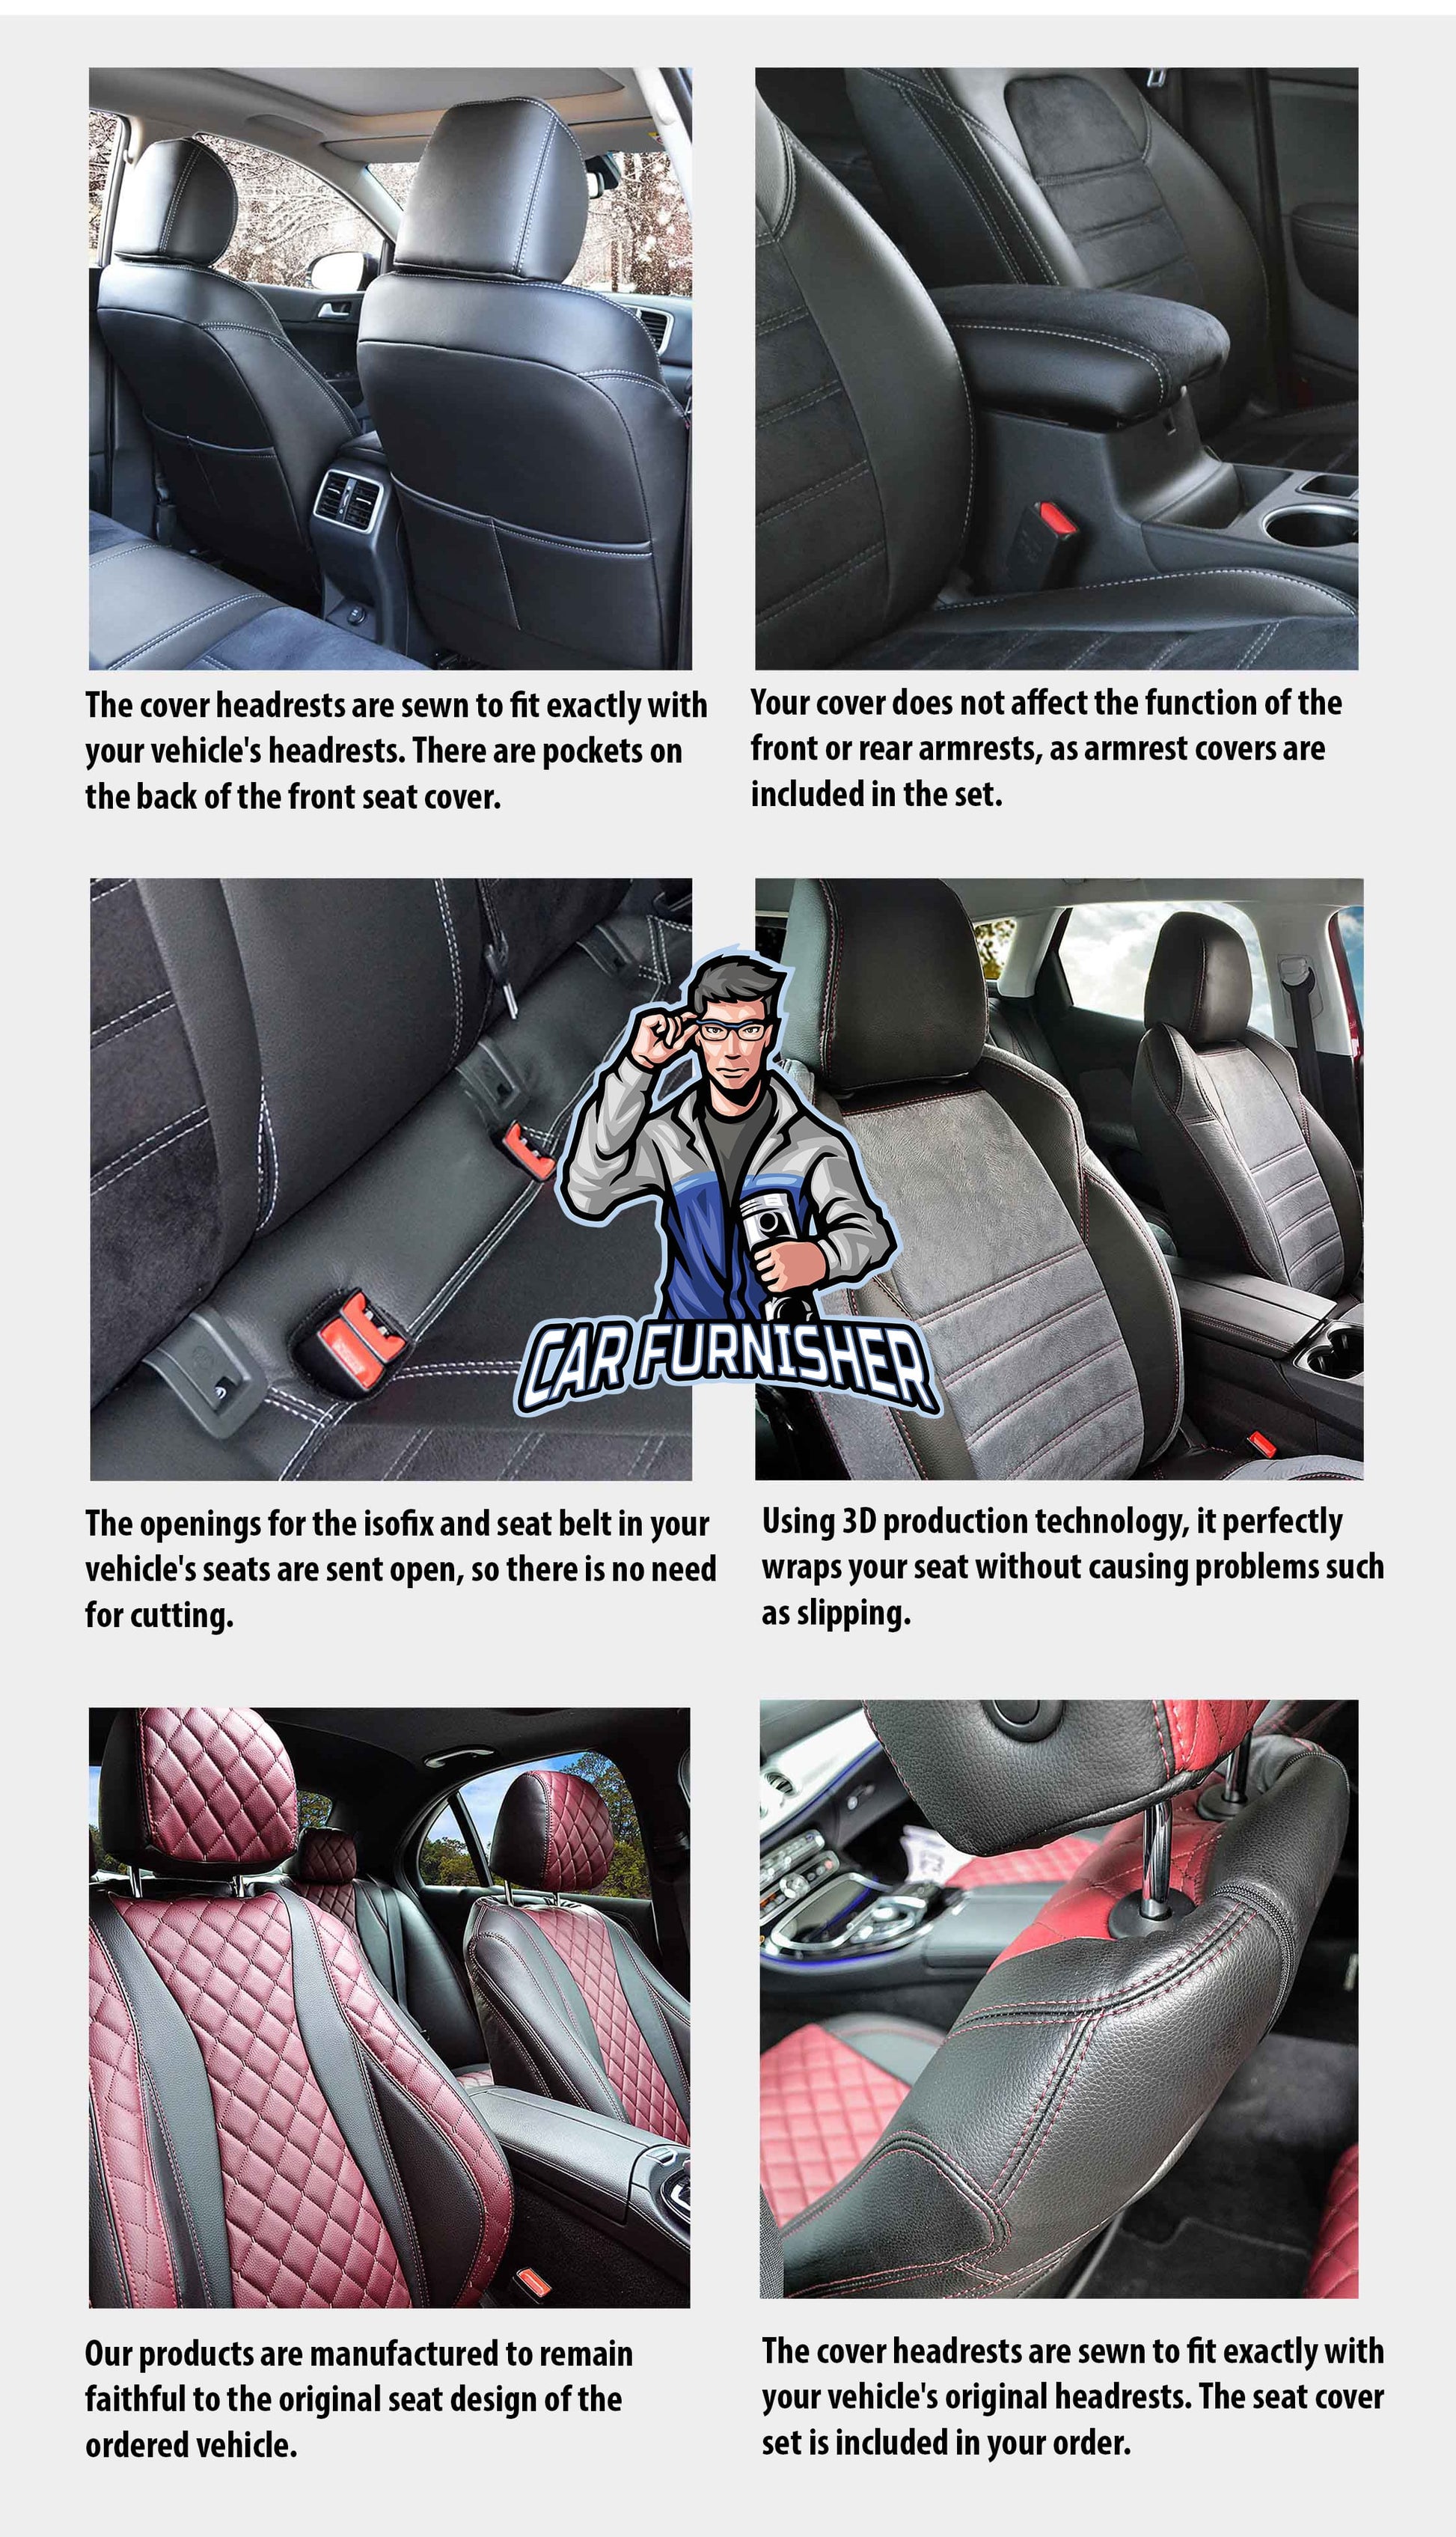 Ford Galaxy Seat Covers Original Jacquard Design Red Jacquard Fabric